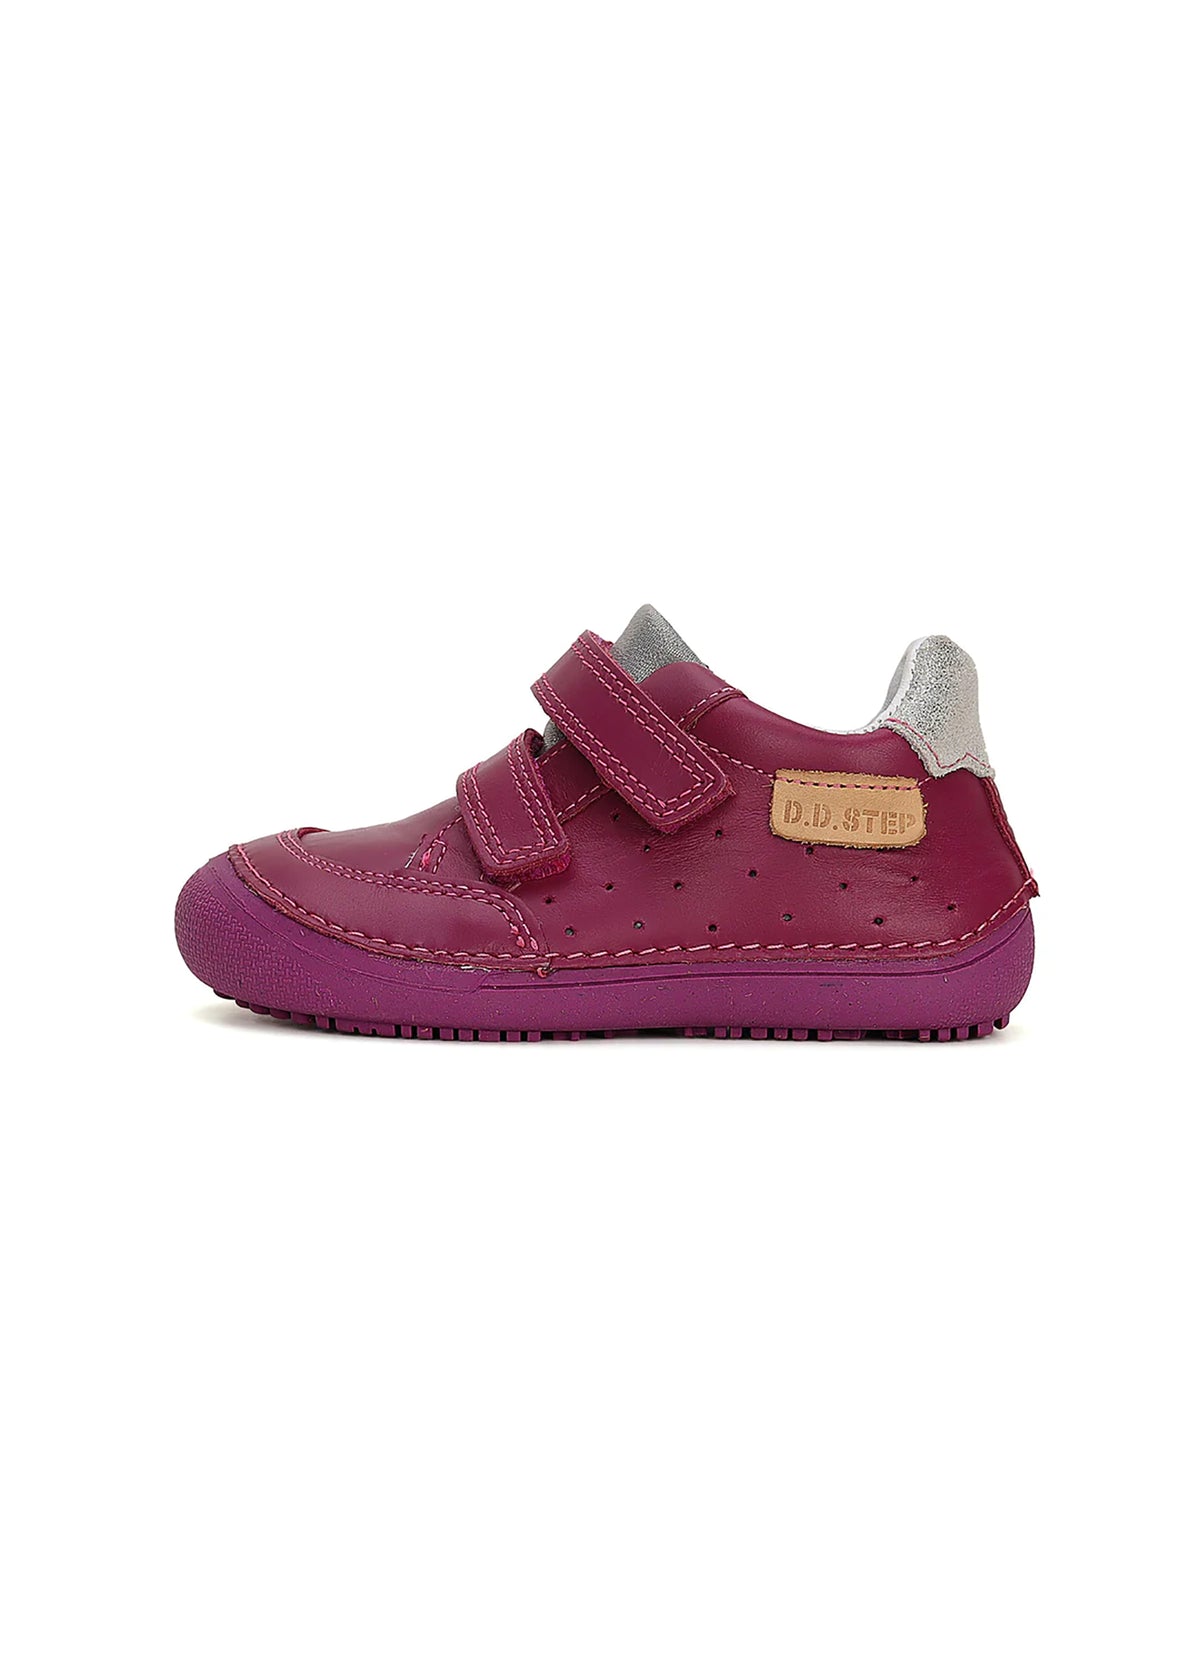 Children's barefoot sneakers - dark pink leather